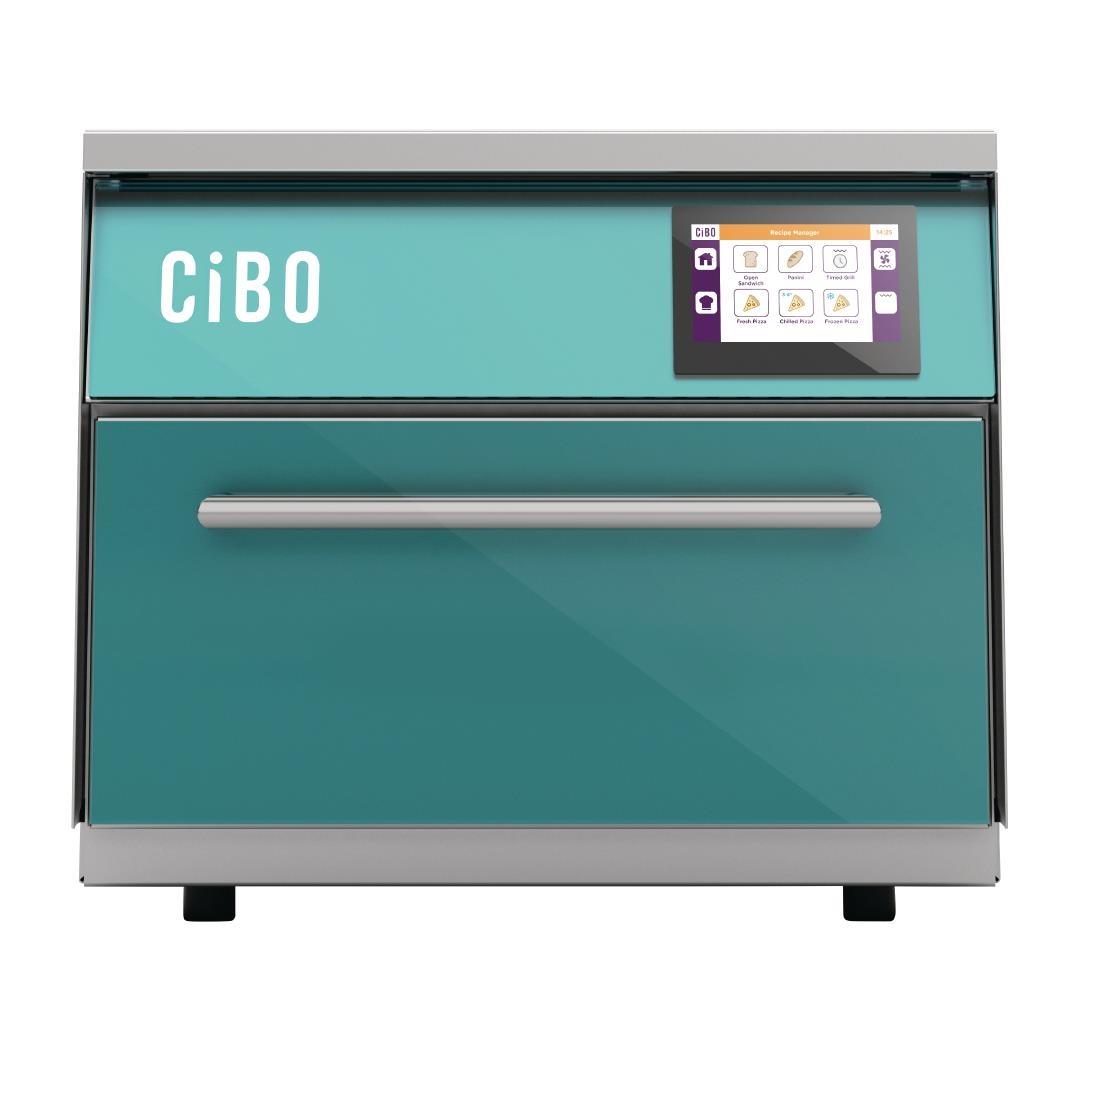 Lincat Cibo High Speed Oven Teal - CY512  - 1